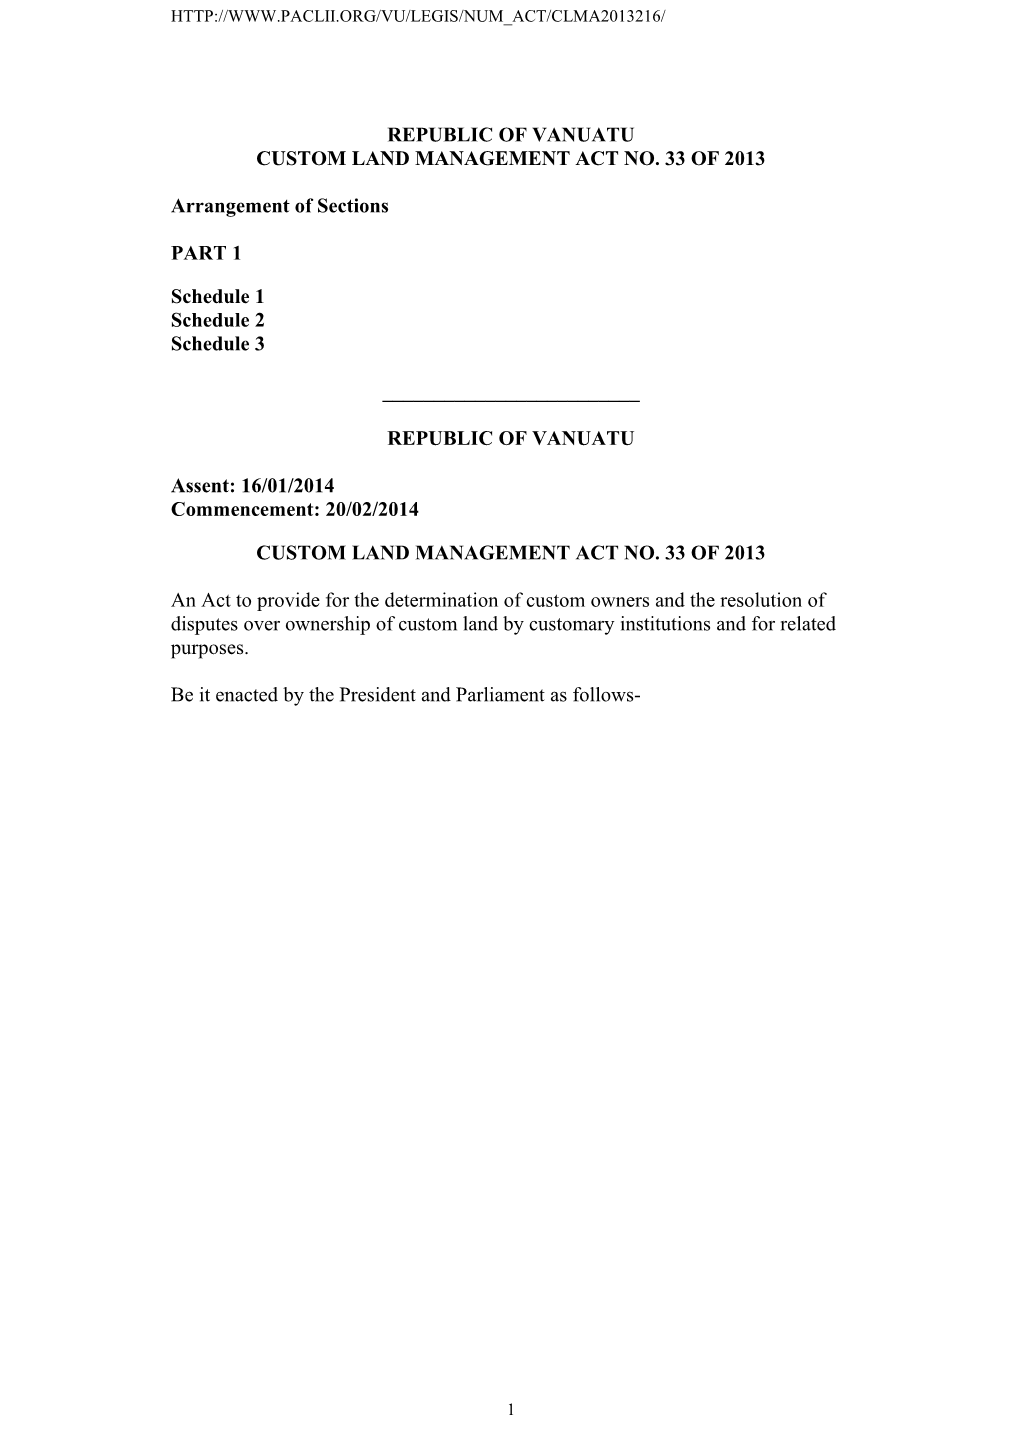 Custom Land Management Act No. 33 of 2013